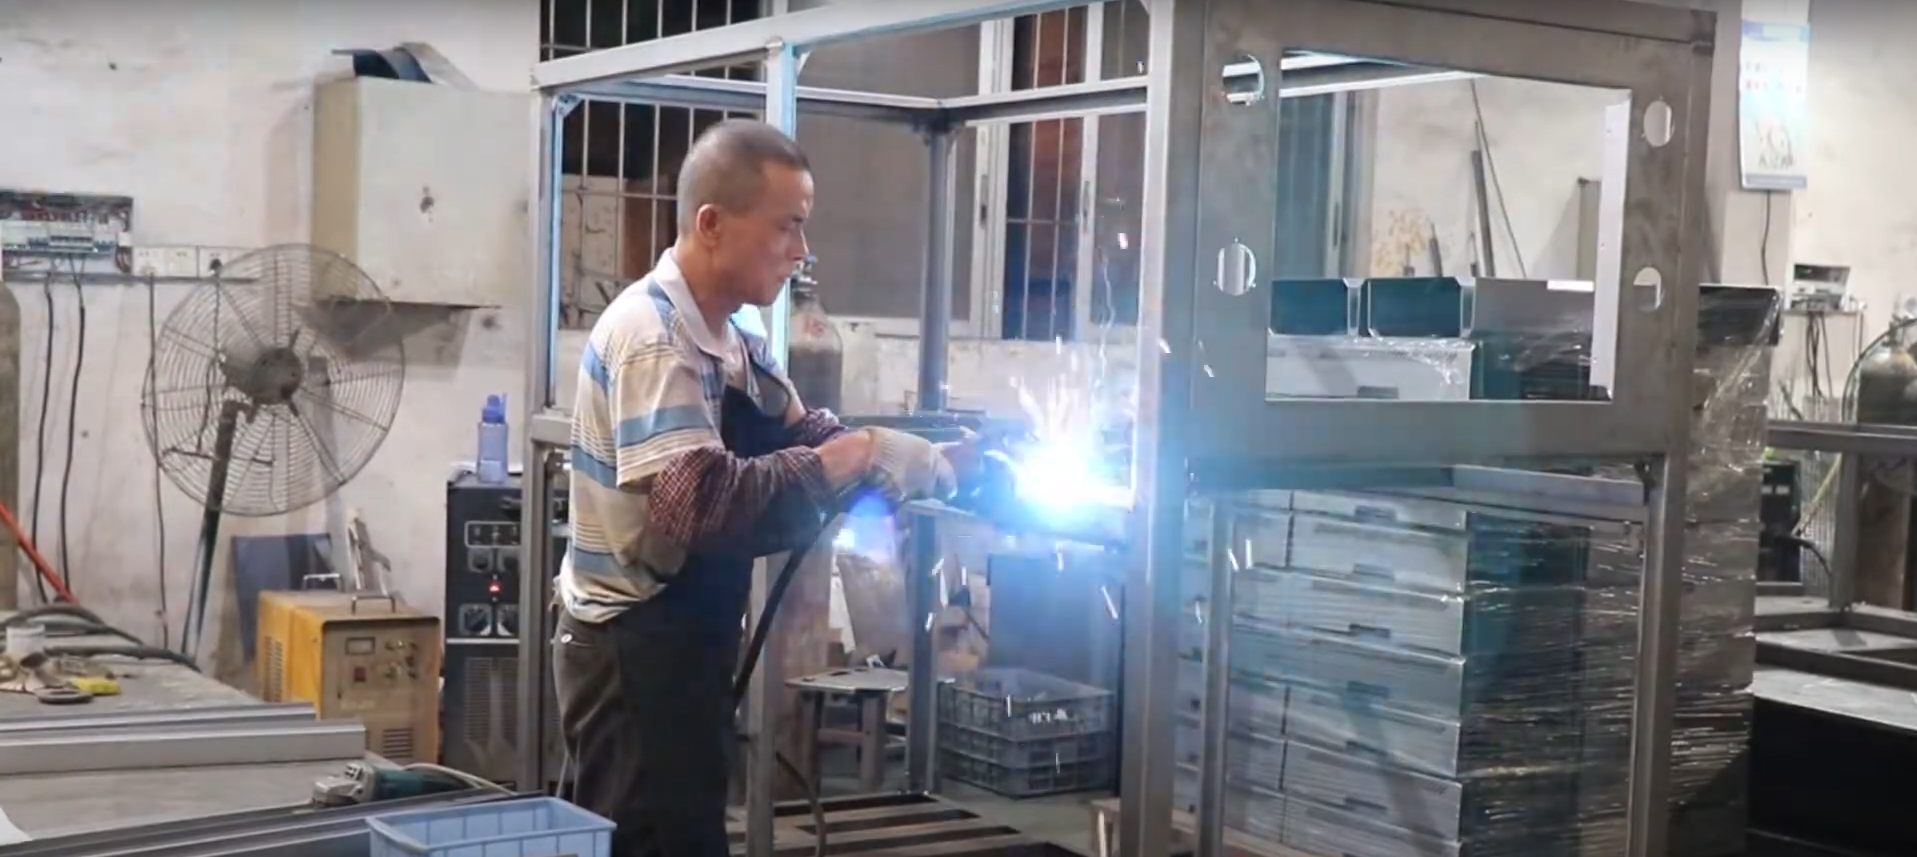 Understanding the Craft: The Art of Steel Fabrication